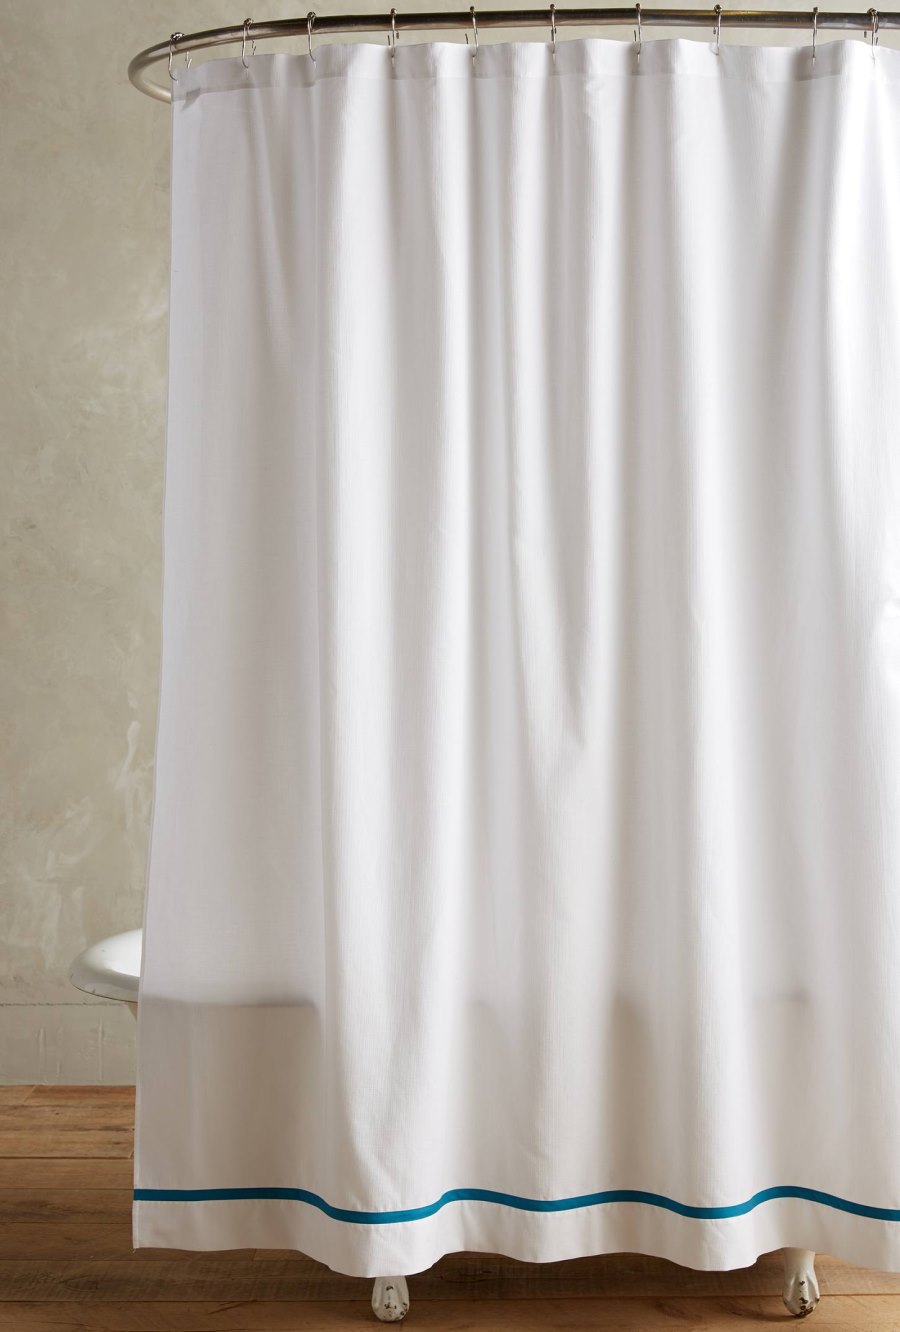 Pique cotton shower curtain from Anthropologie